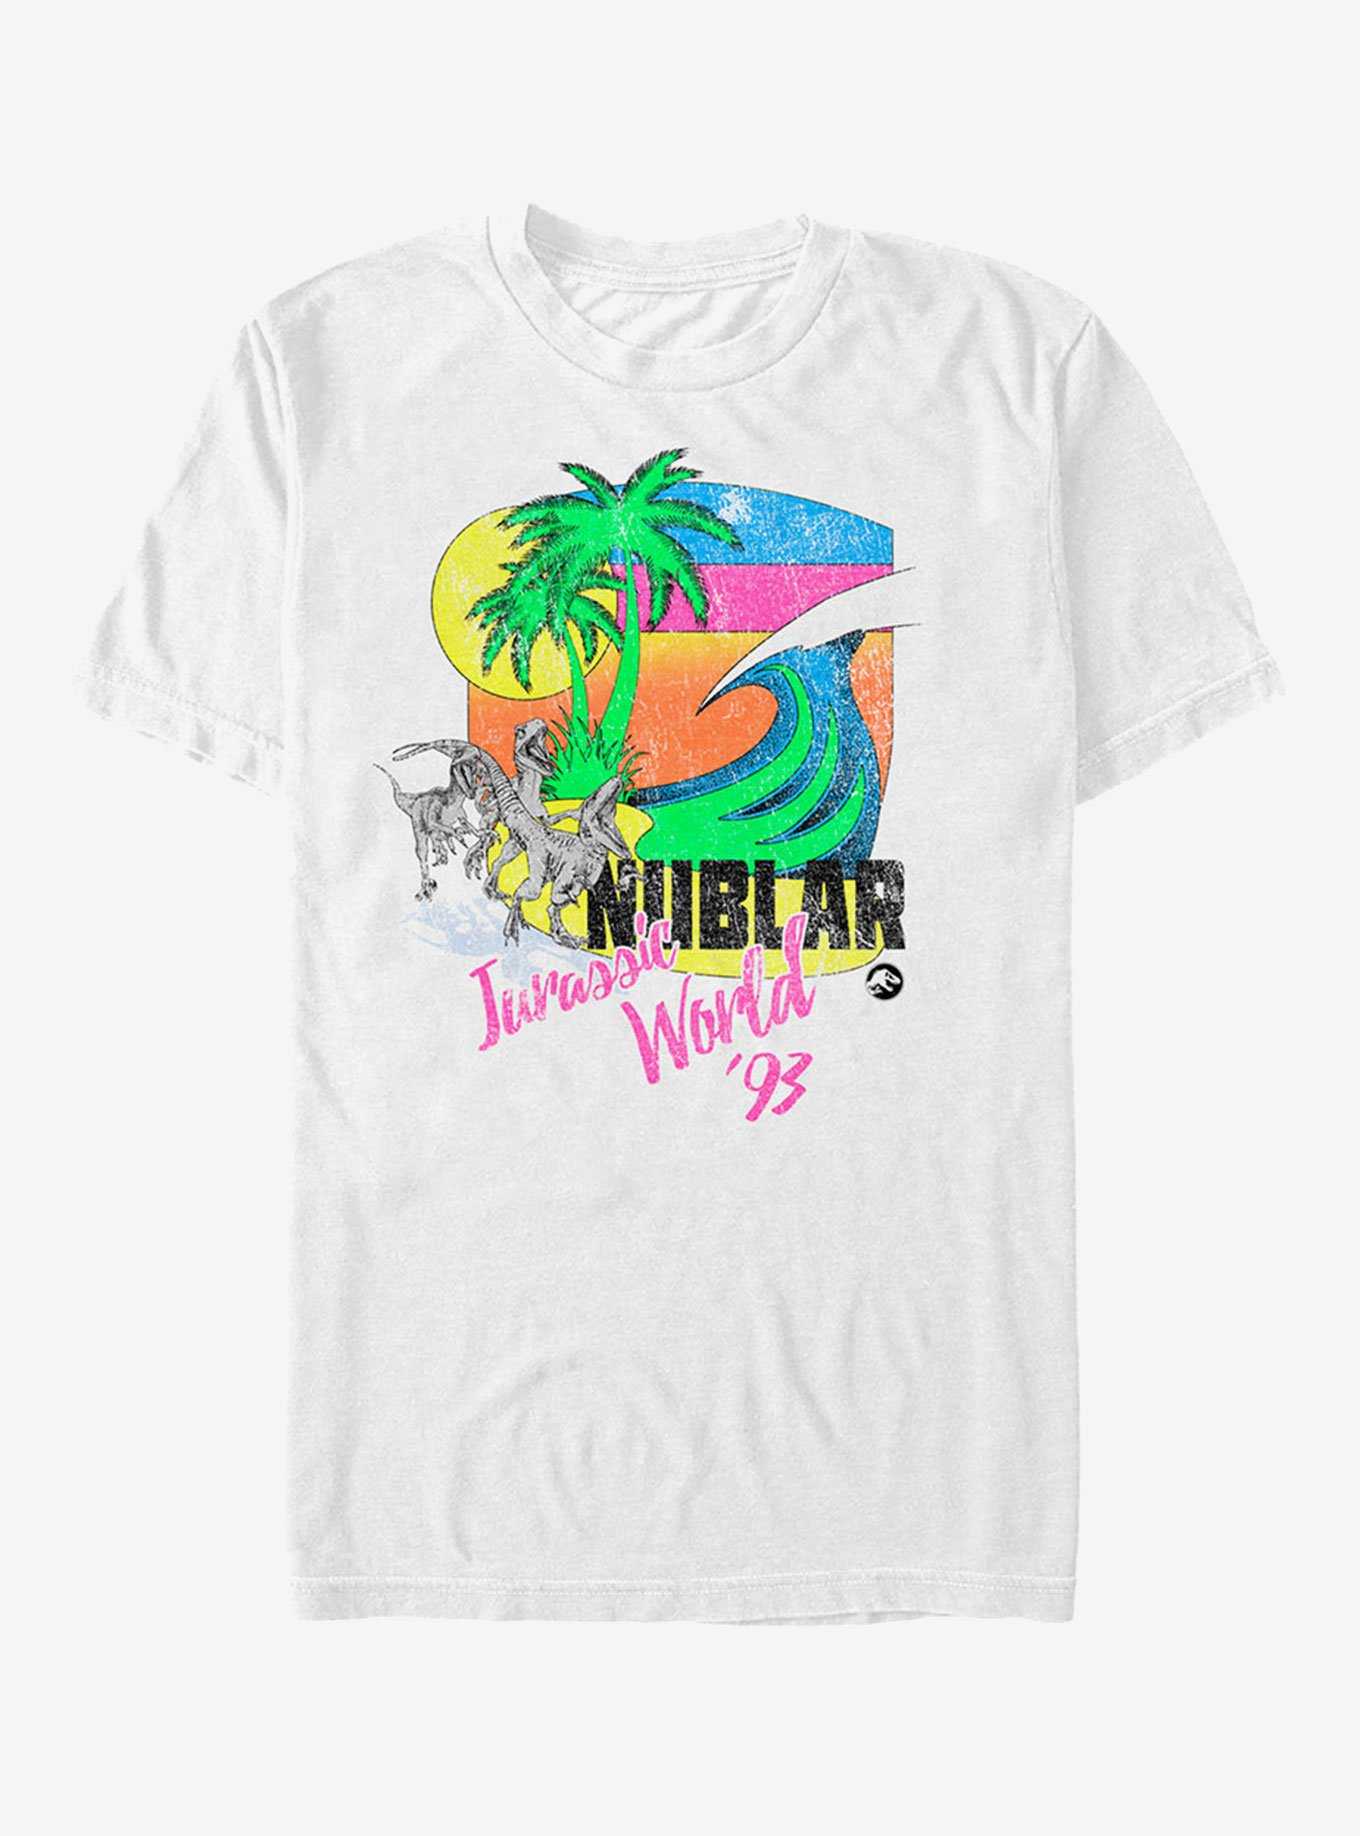 Retro '93 Surf Nublar T-Shirt, , hi-res